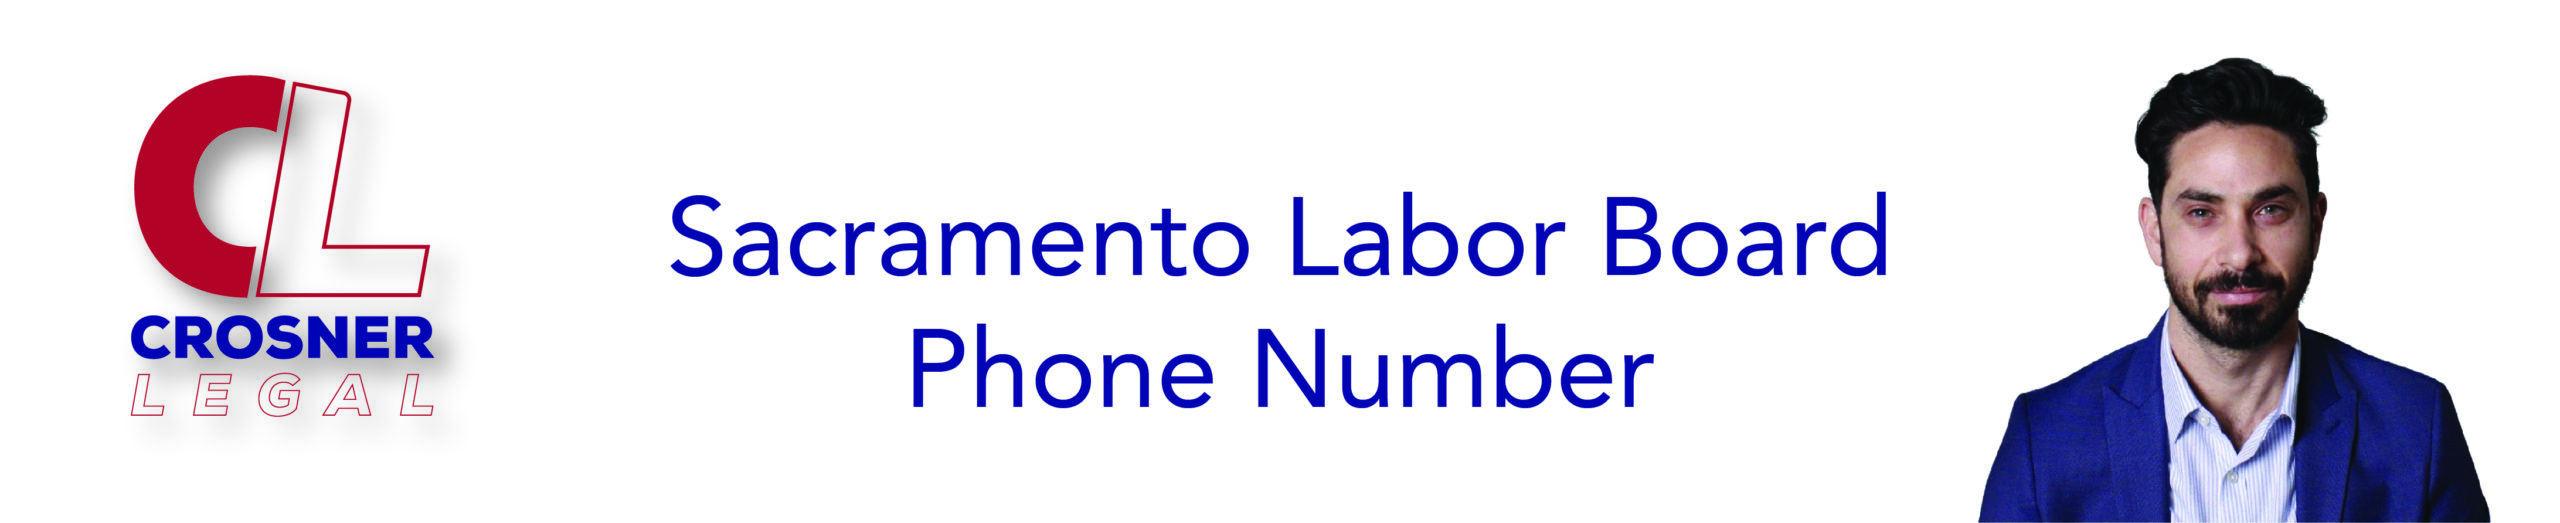 Sacramento Labor Board Phone Number